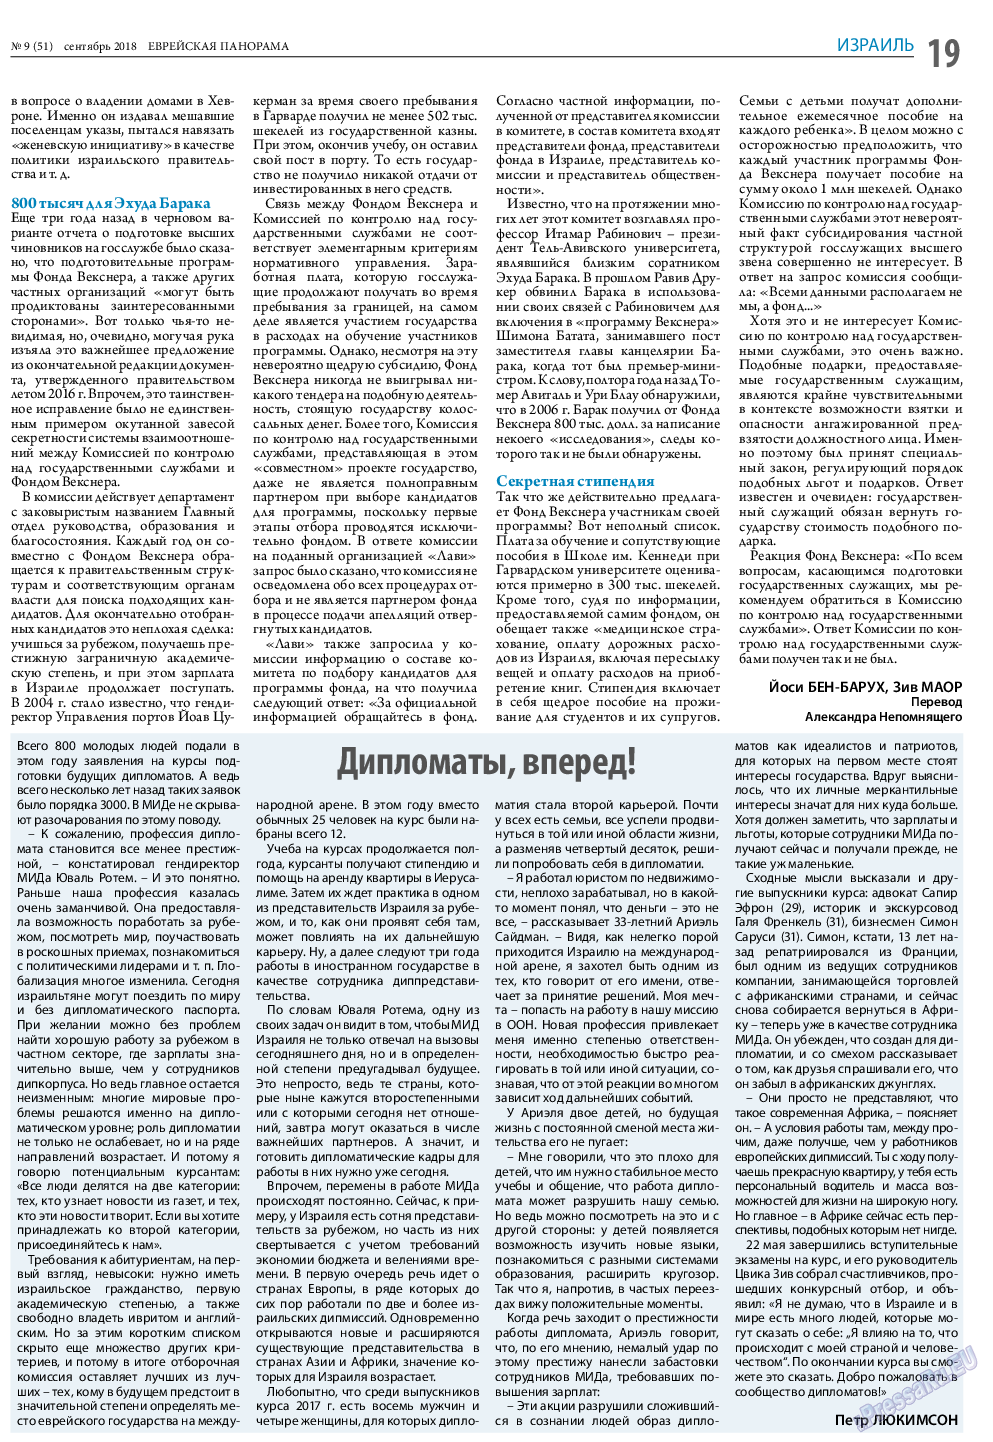 Еврейская панорама, газета. 2018 №9 стр.19